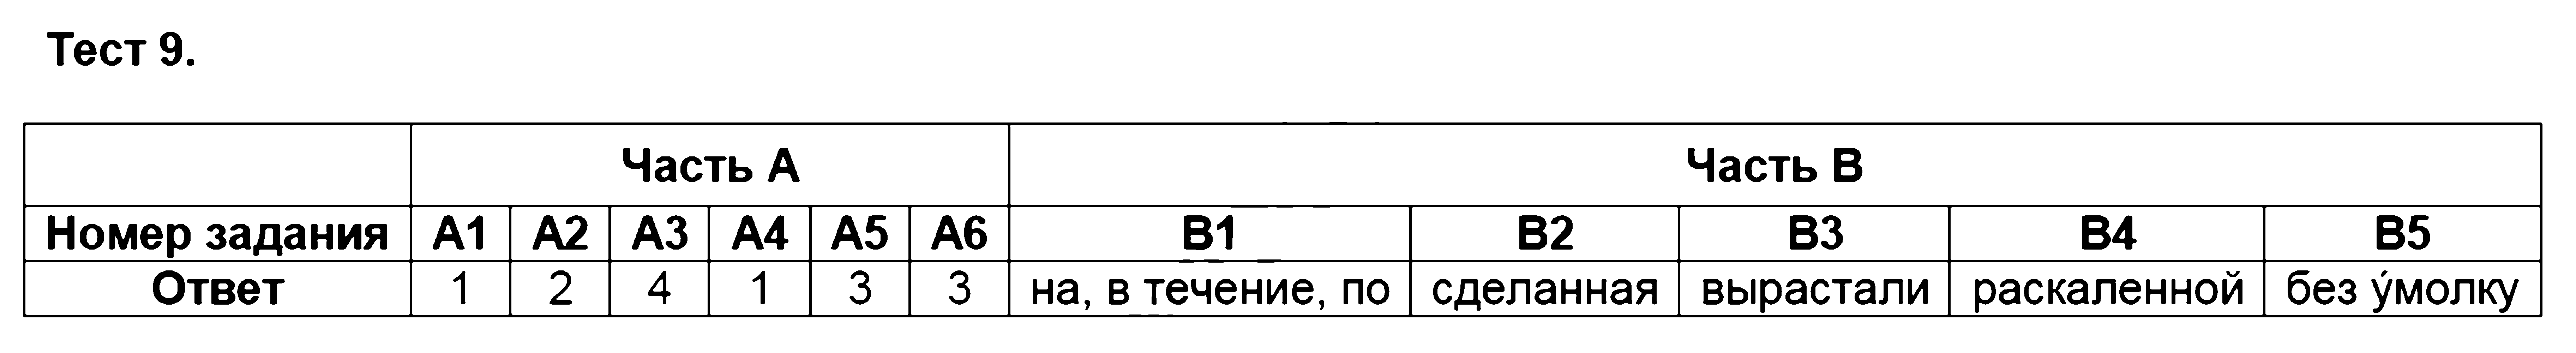 ГДЗ Русский язык 8 класс - Тест 9